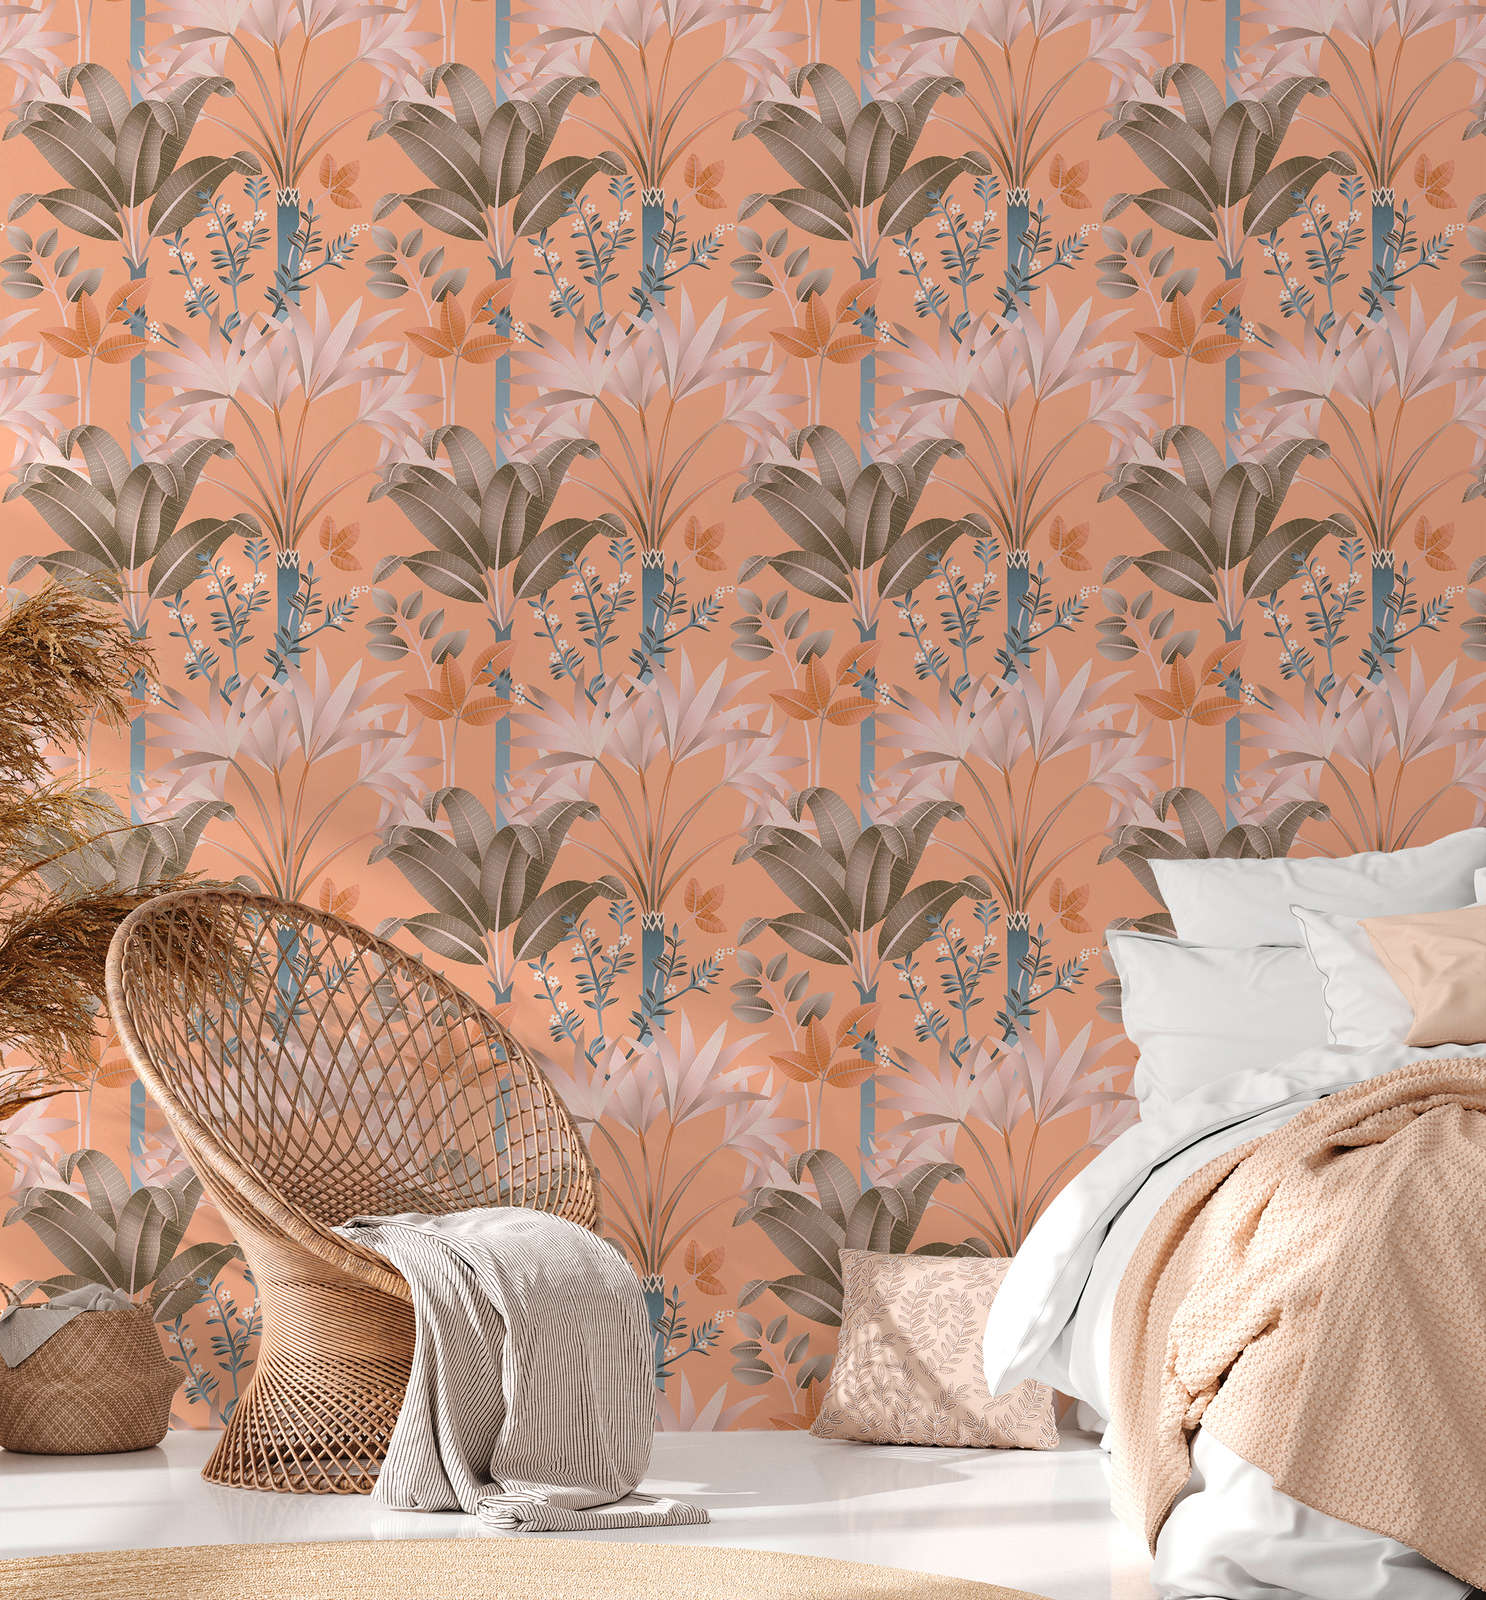             Non-woven wallpaper with leaf pattern - multicoloured, orange, blue
        